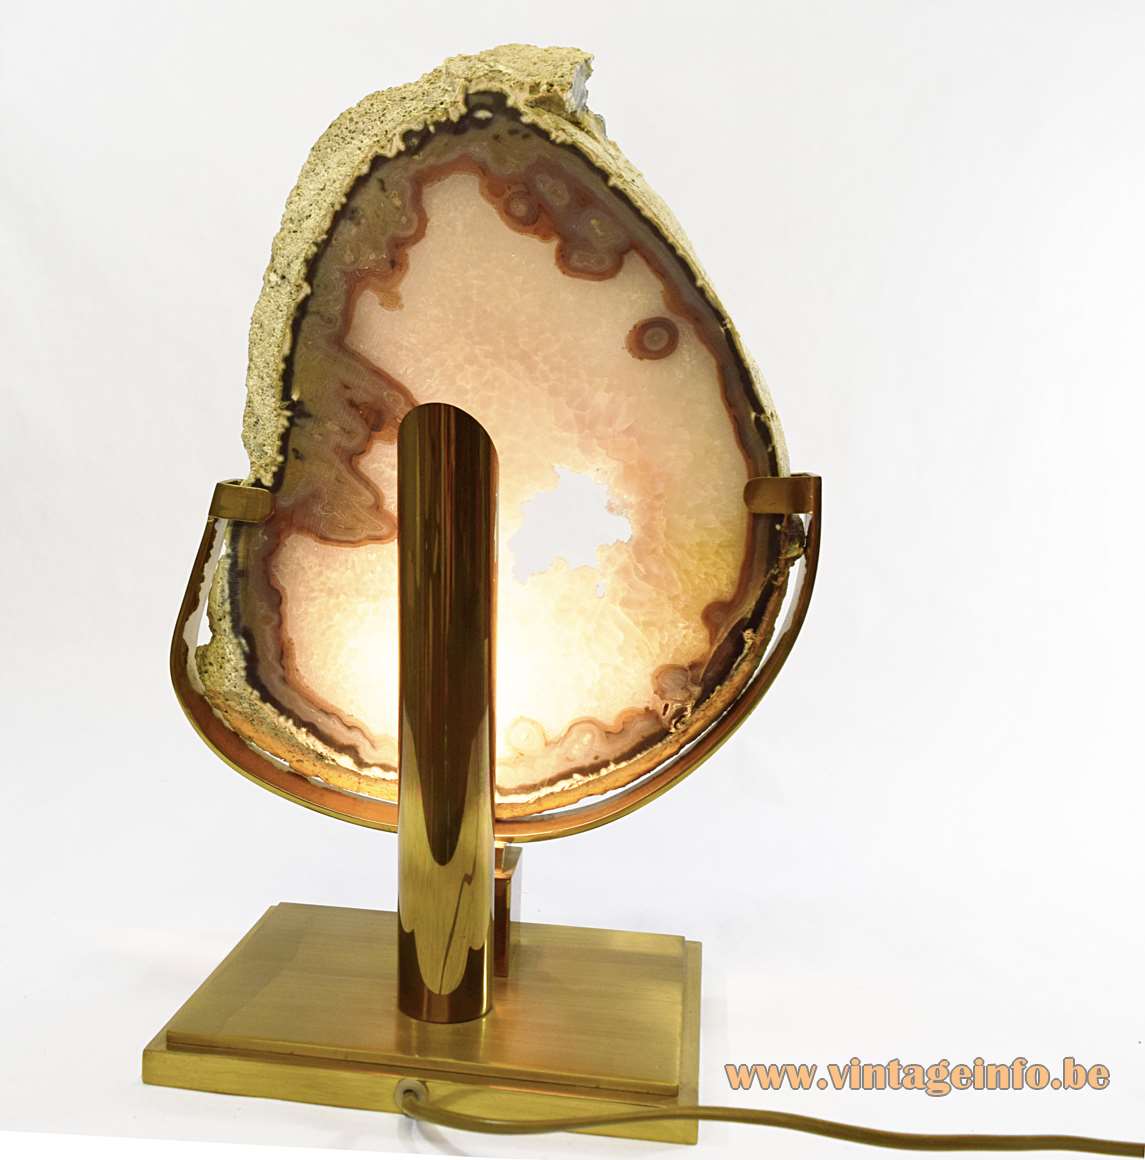 Agate geode table lamp rectangular brass base thick slice Willy Daro 1970s JLB Belgium vintage